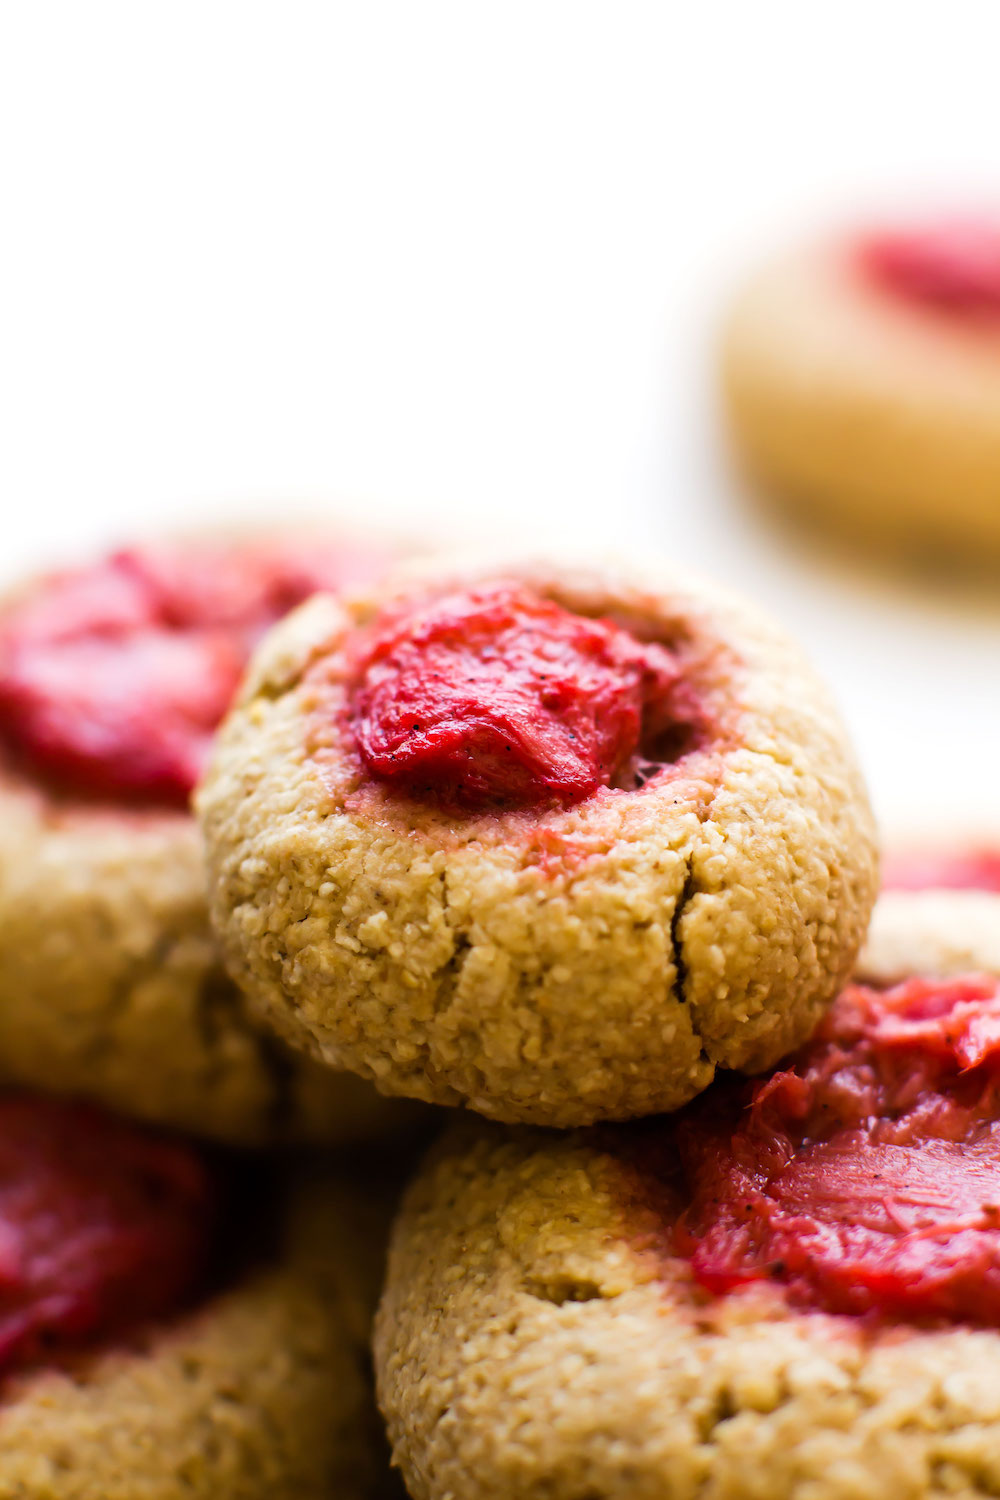 Vegan Thumbprint Cookies {gluten-free & oil-free}